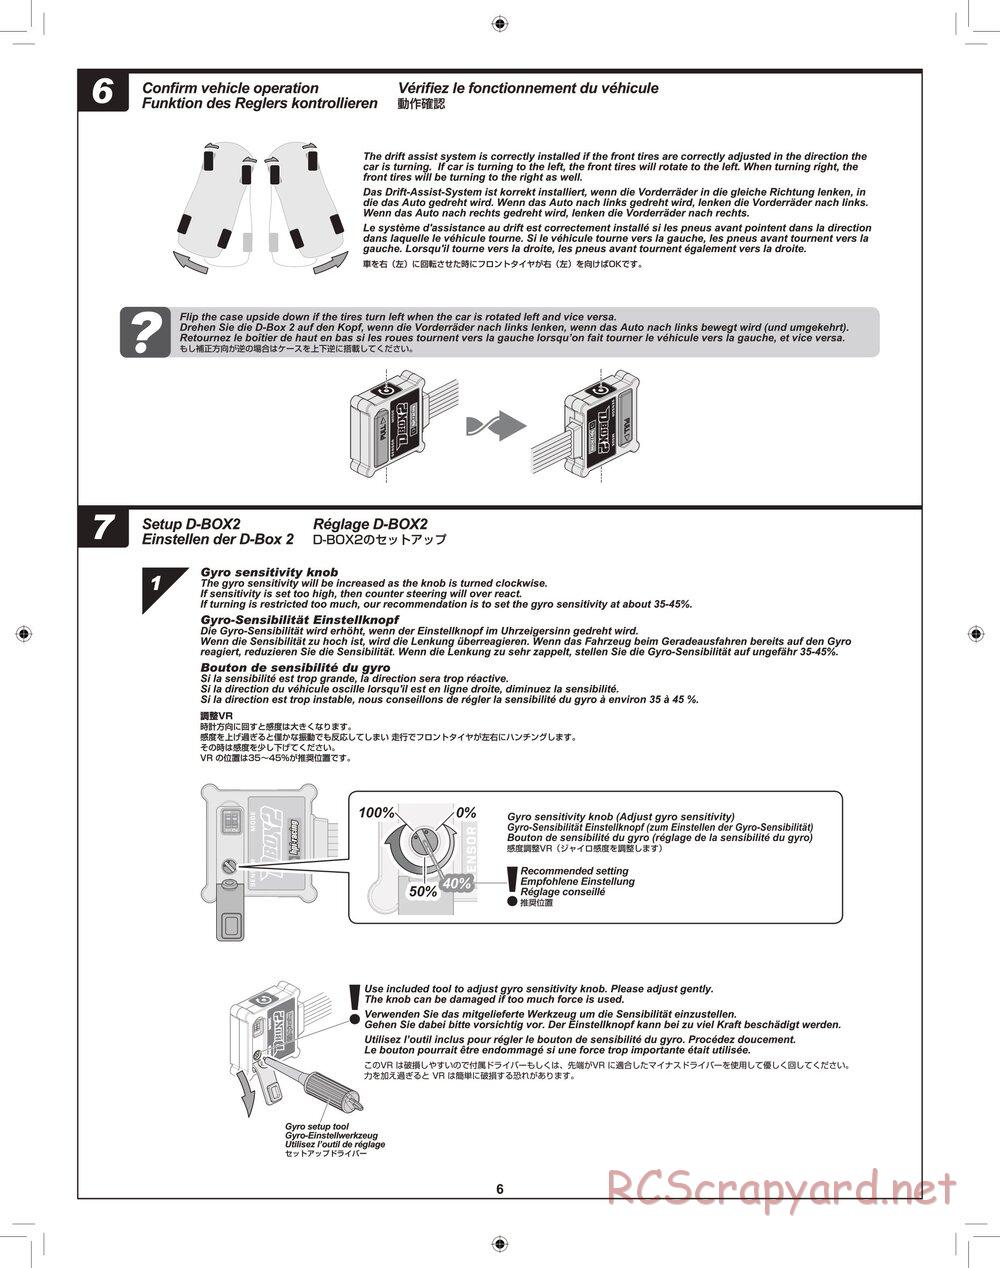 HPI - Baja 5B 2.0 D-Box2 - Manual - Page 6